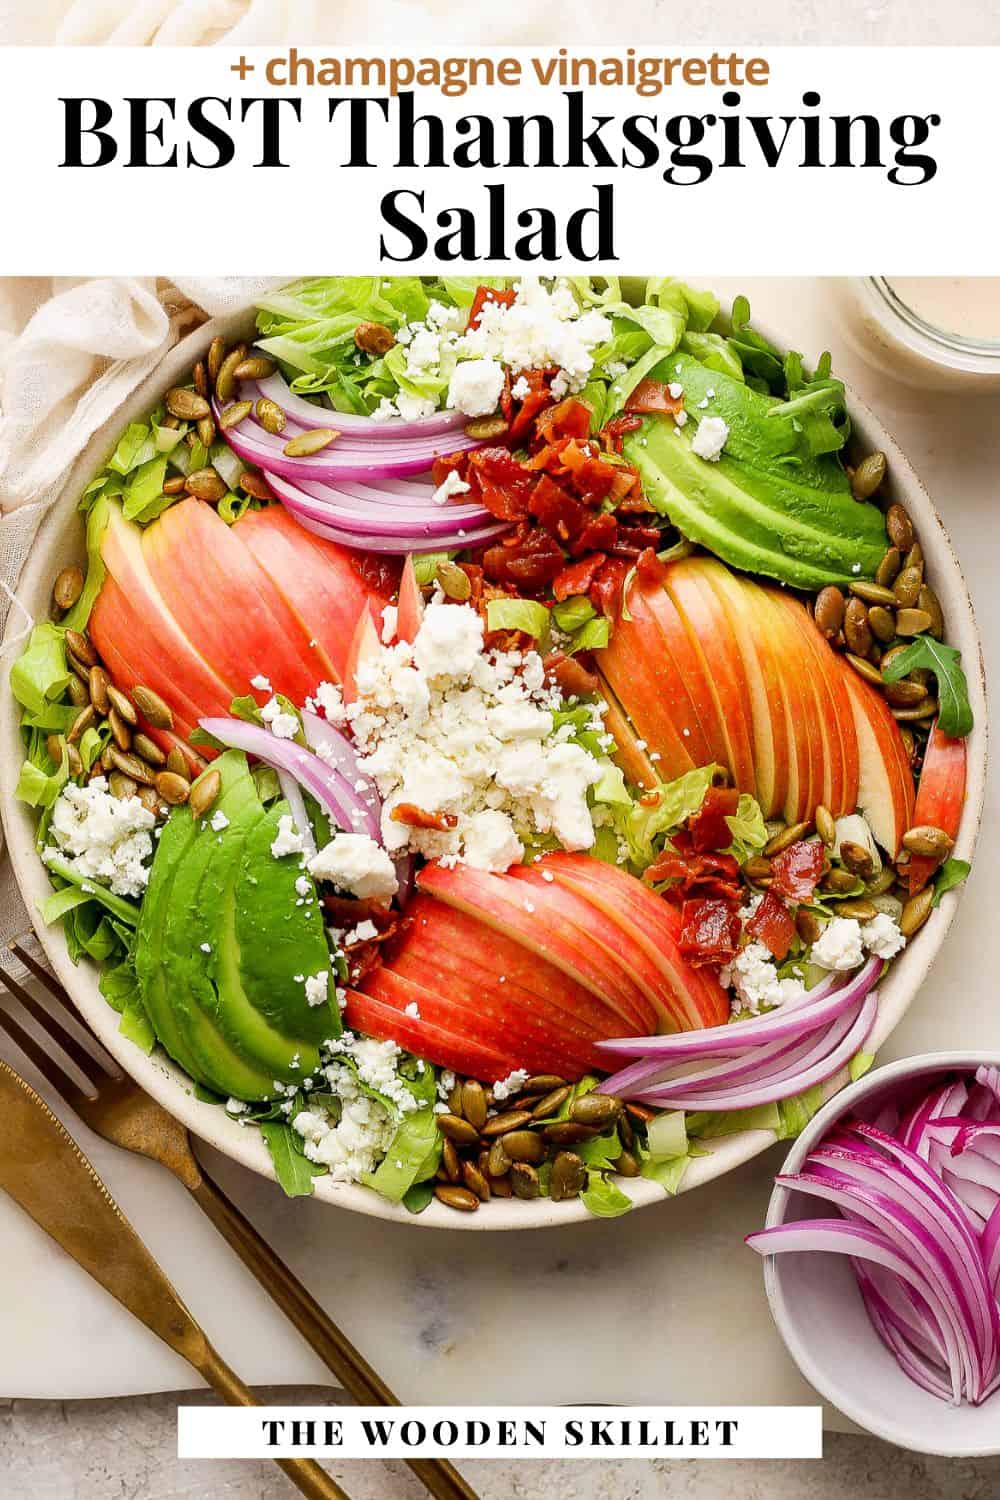 Pinterest image showing the thanksgiving salad with the title "Best thanksgiving salad + champagne vinaigrette.